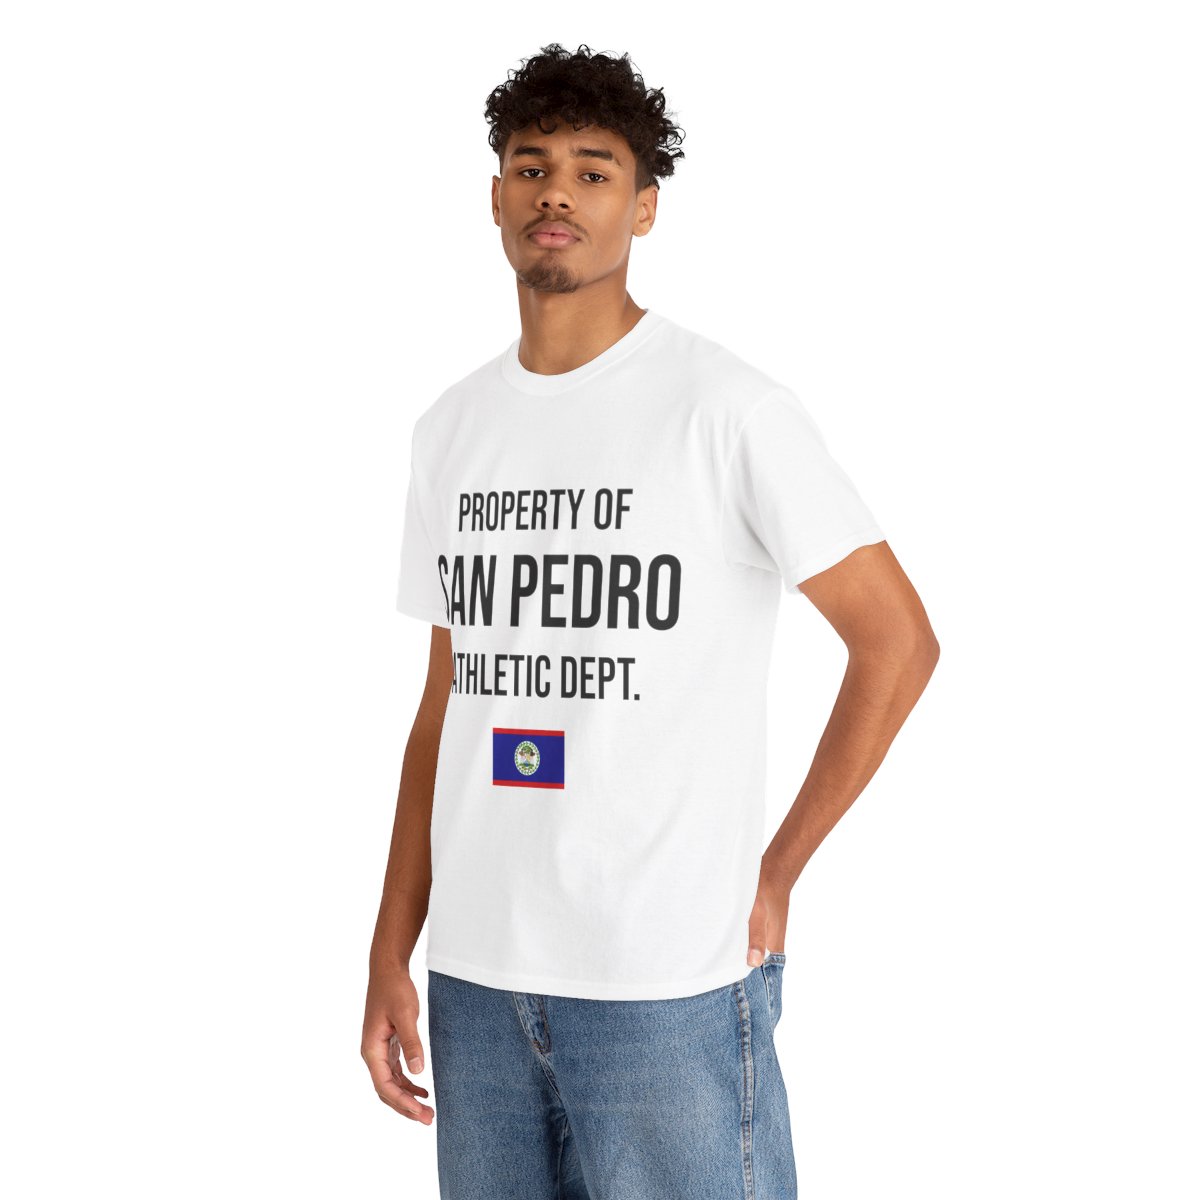 San Pedro Athletic Dept. Unisex Tshirt product thumbnail image